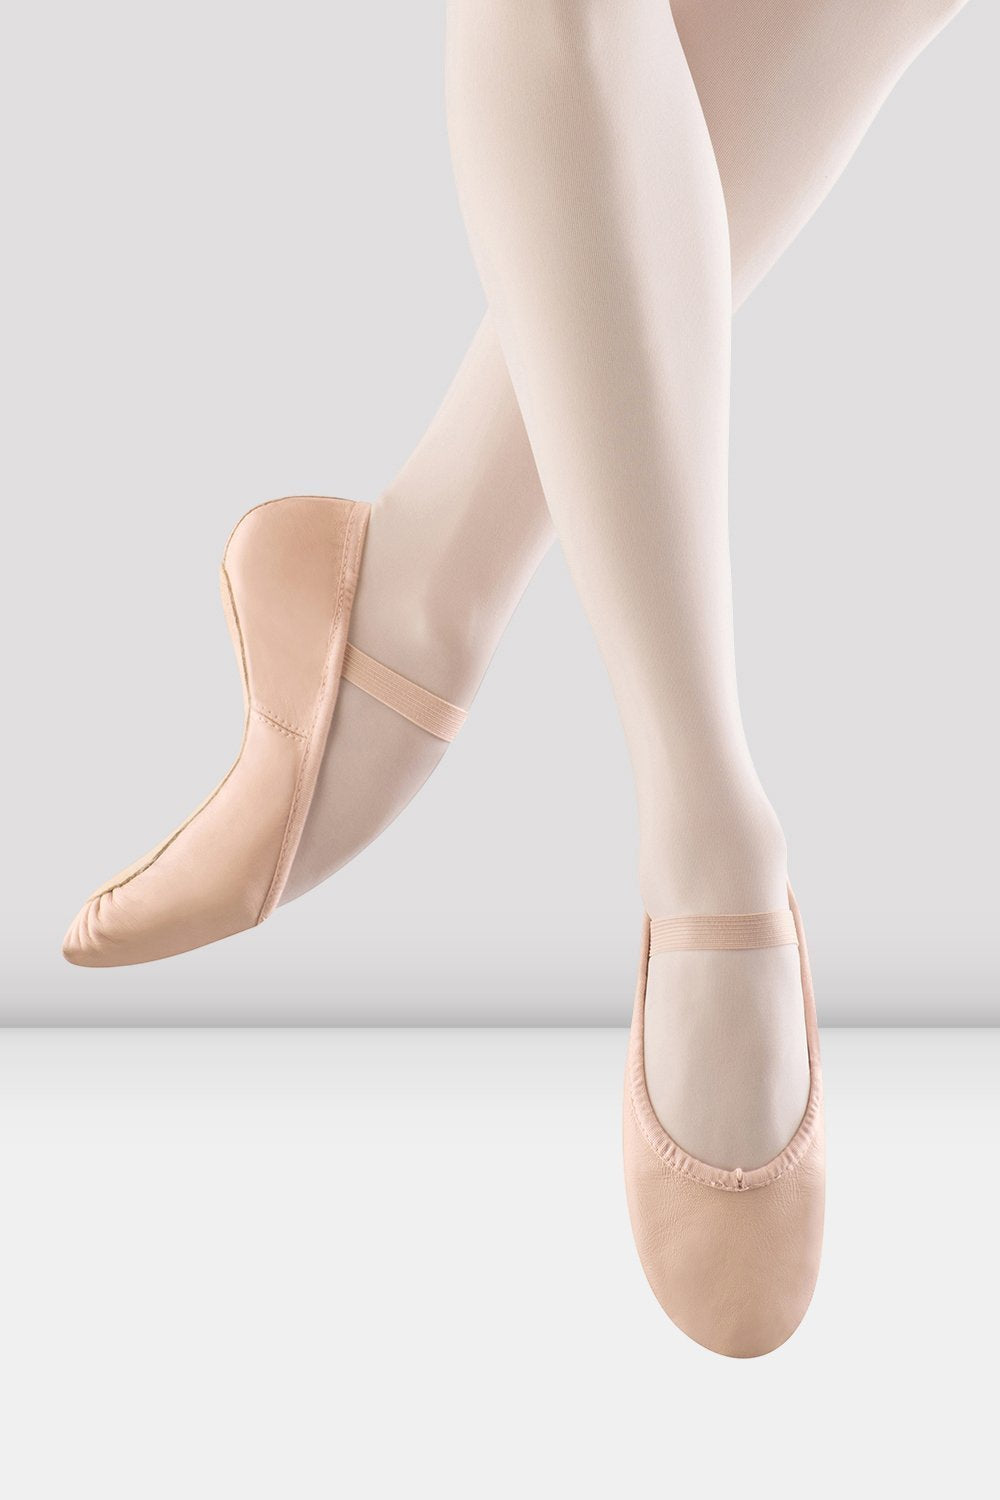 Bloch Dansoft Full Sole Leather Ballet Shoes (Children)SO205G